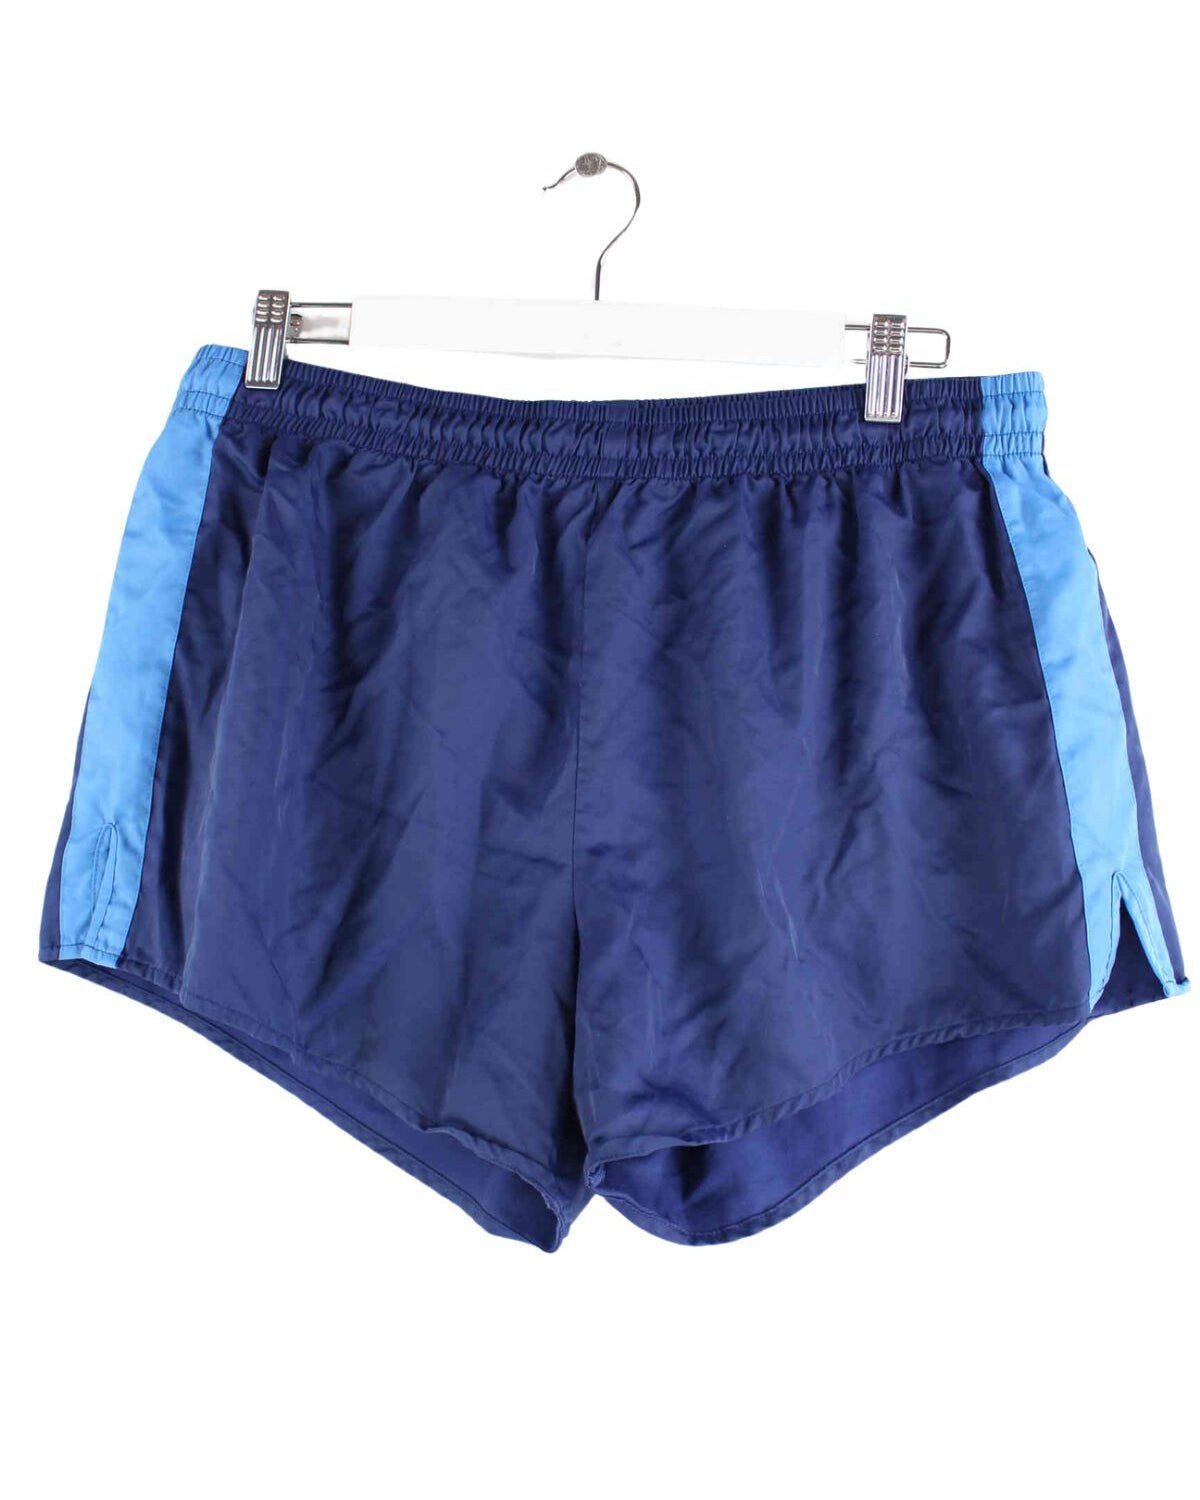 Adidas Damen 80s Vintage Shorts Blau M (front image)